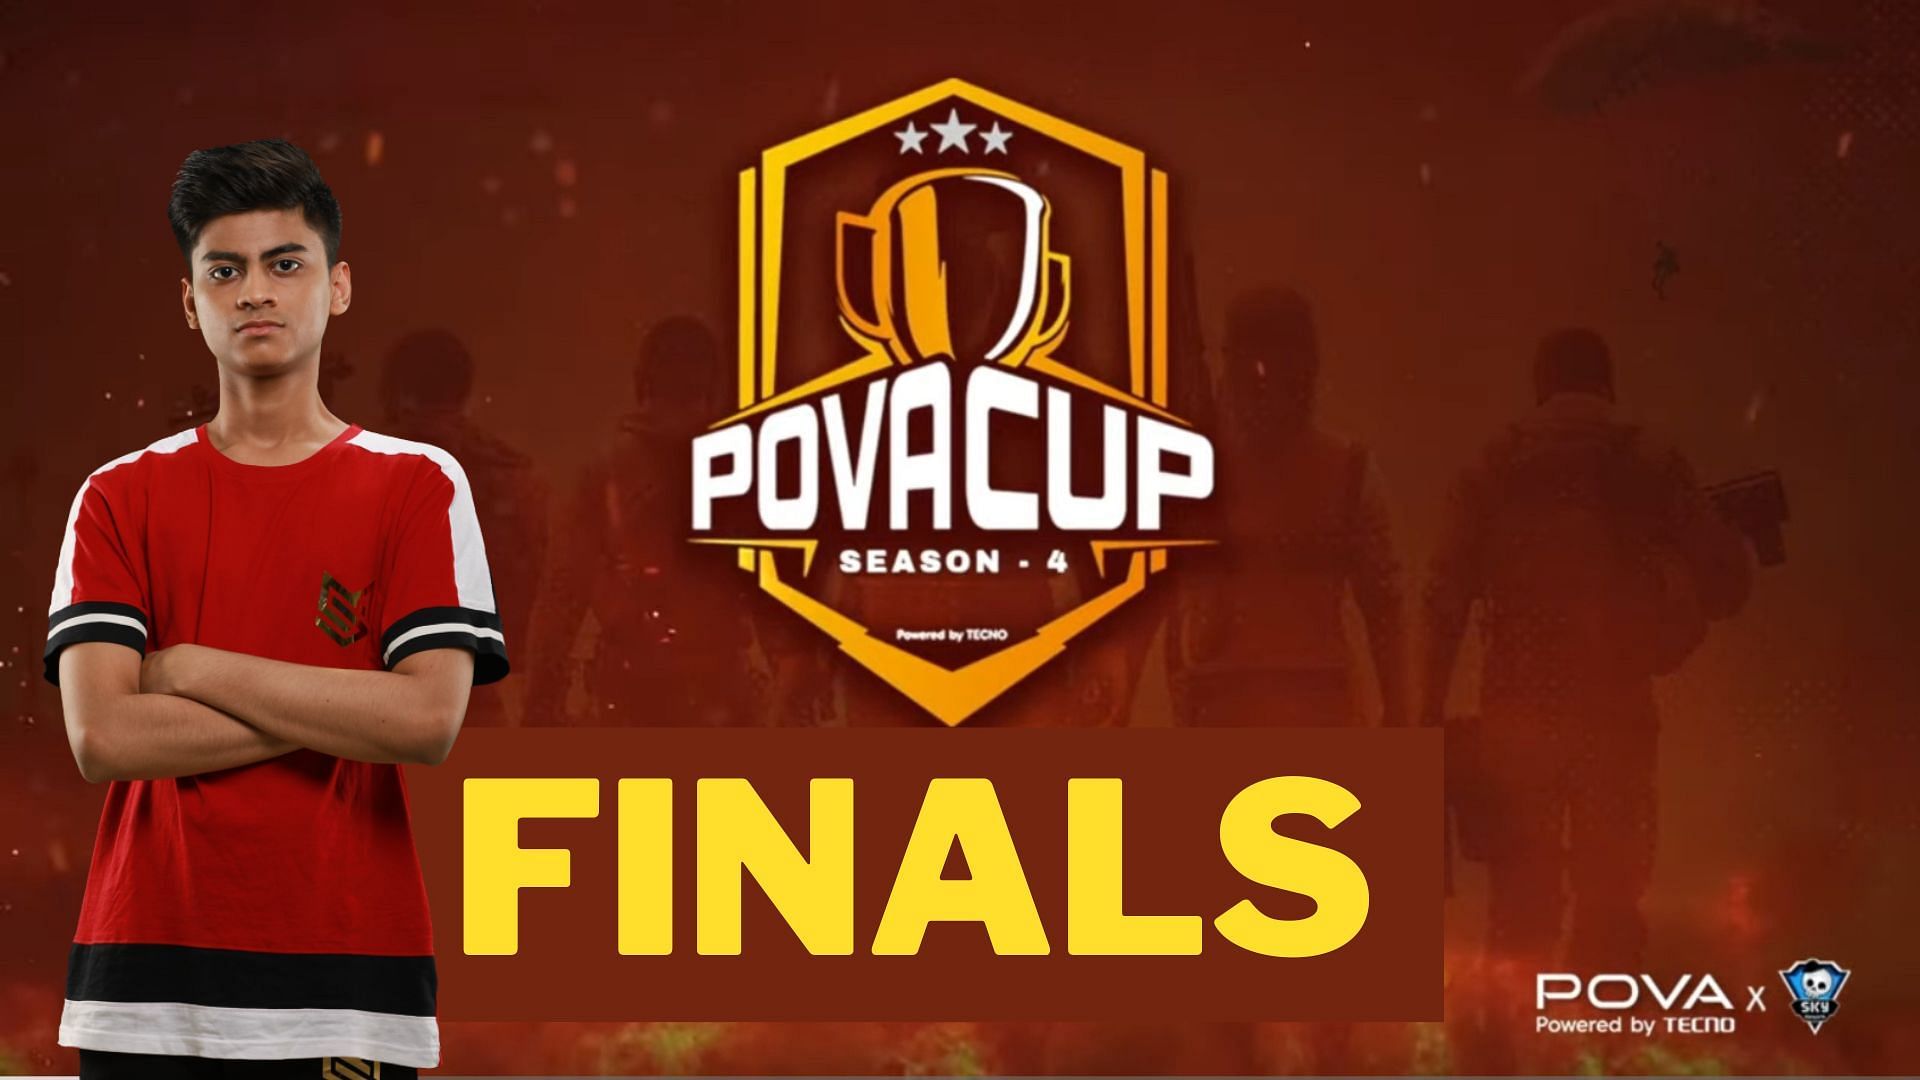 POVA Cup Finals starts on December 26 (Image via Sportskeeda)